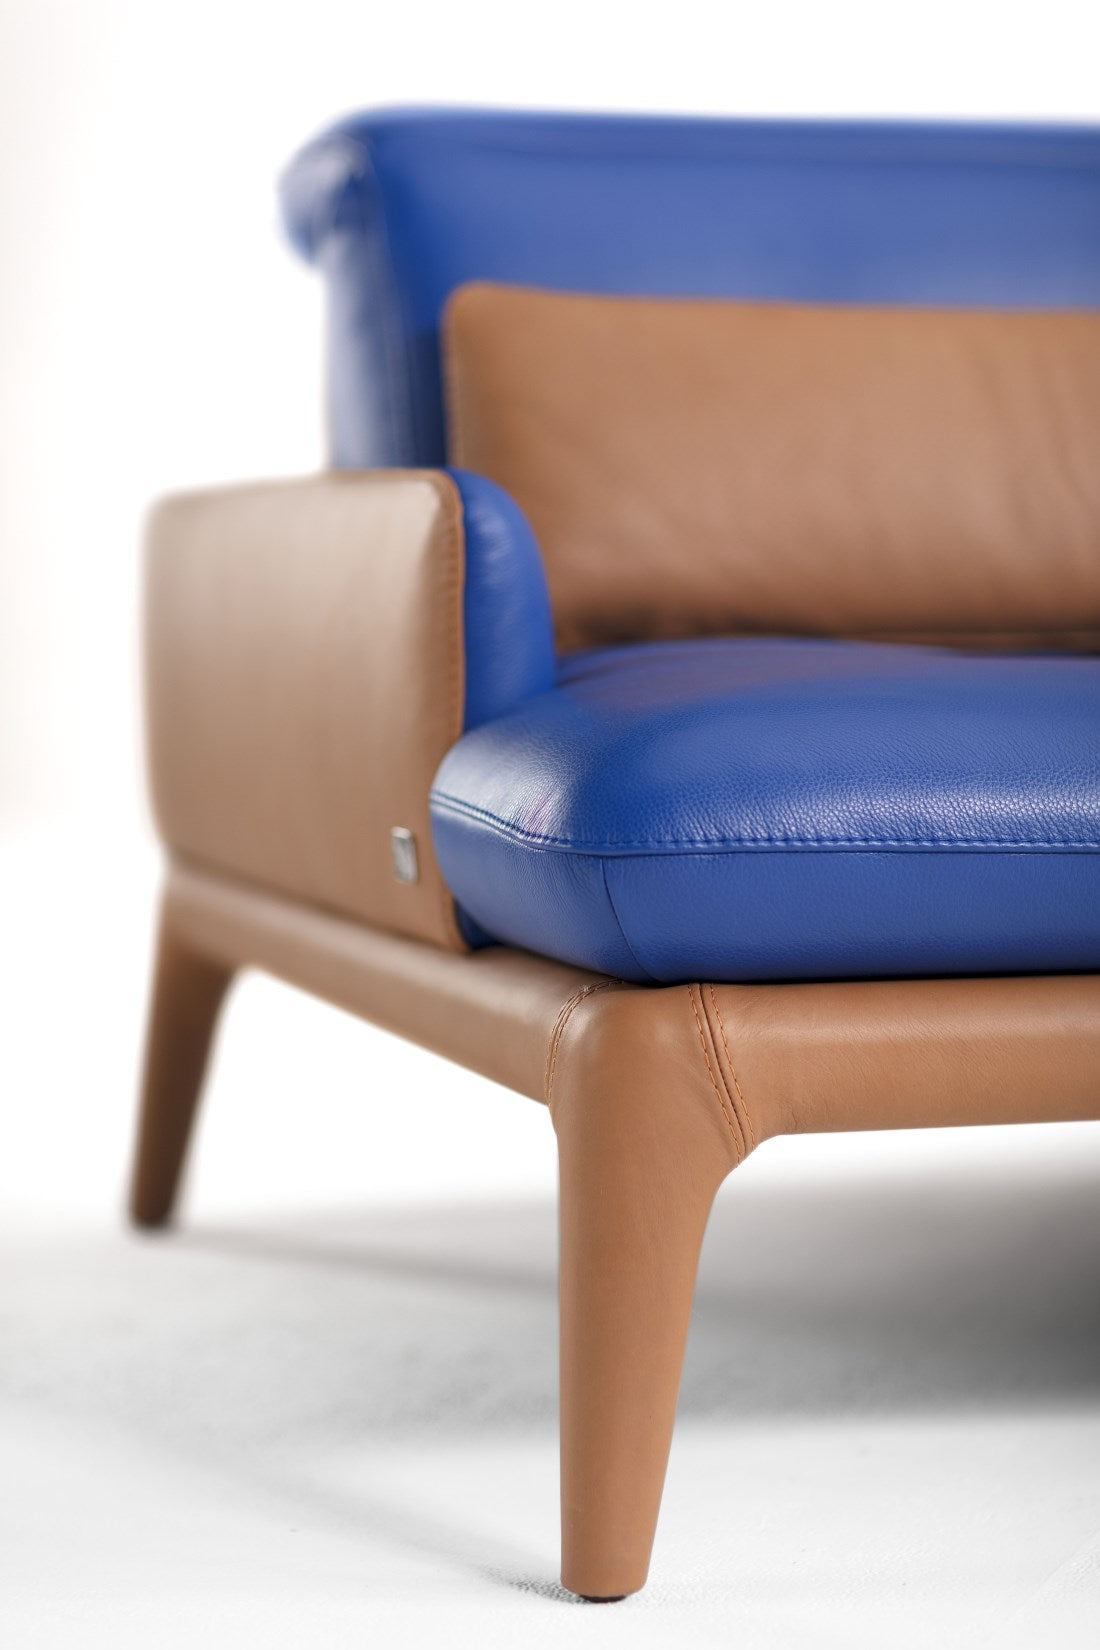 Flex Sofa / Sectional - Modern Furniture | Contemporary Furniture - italydesign